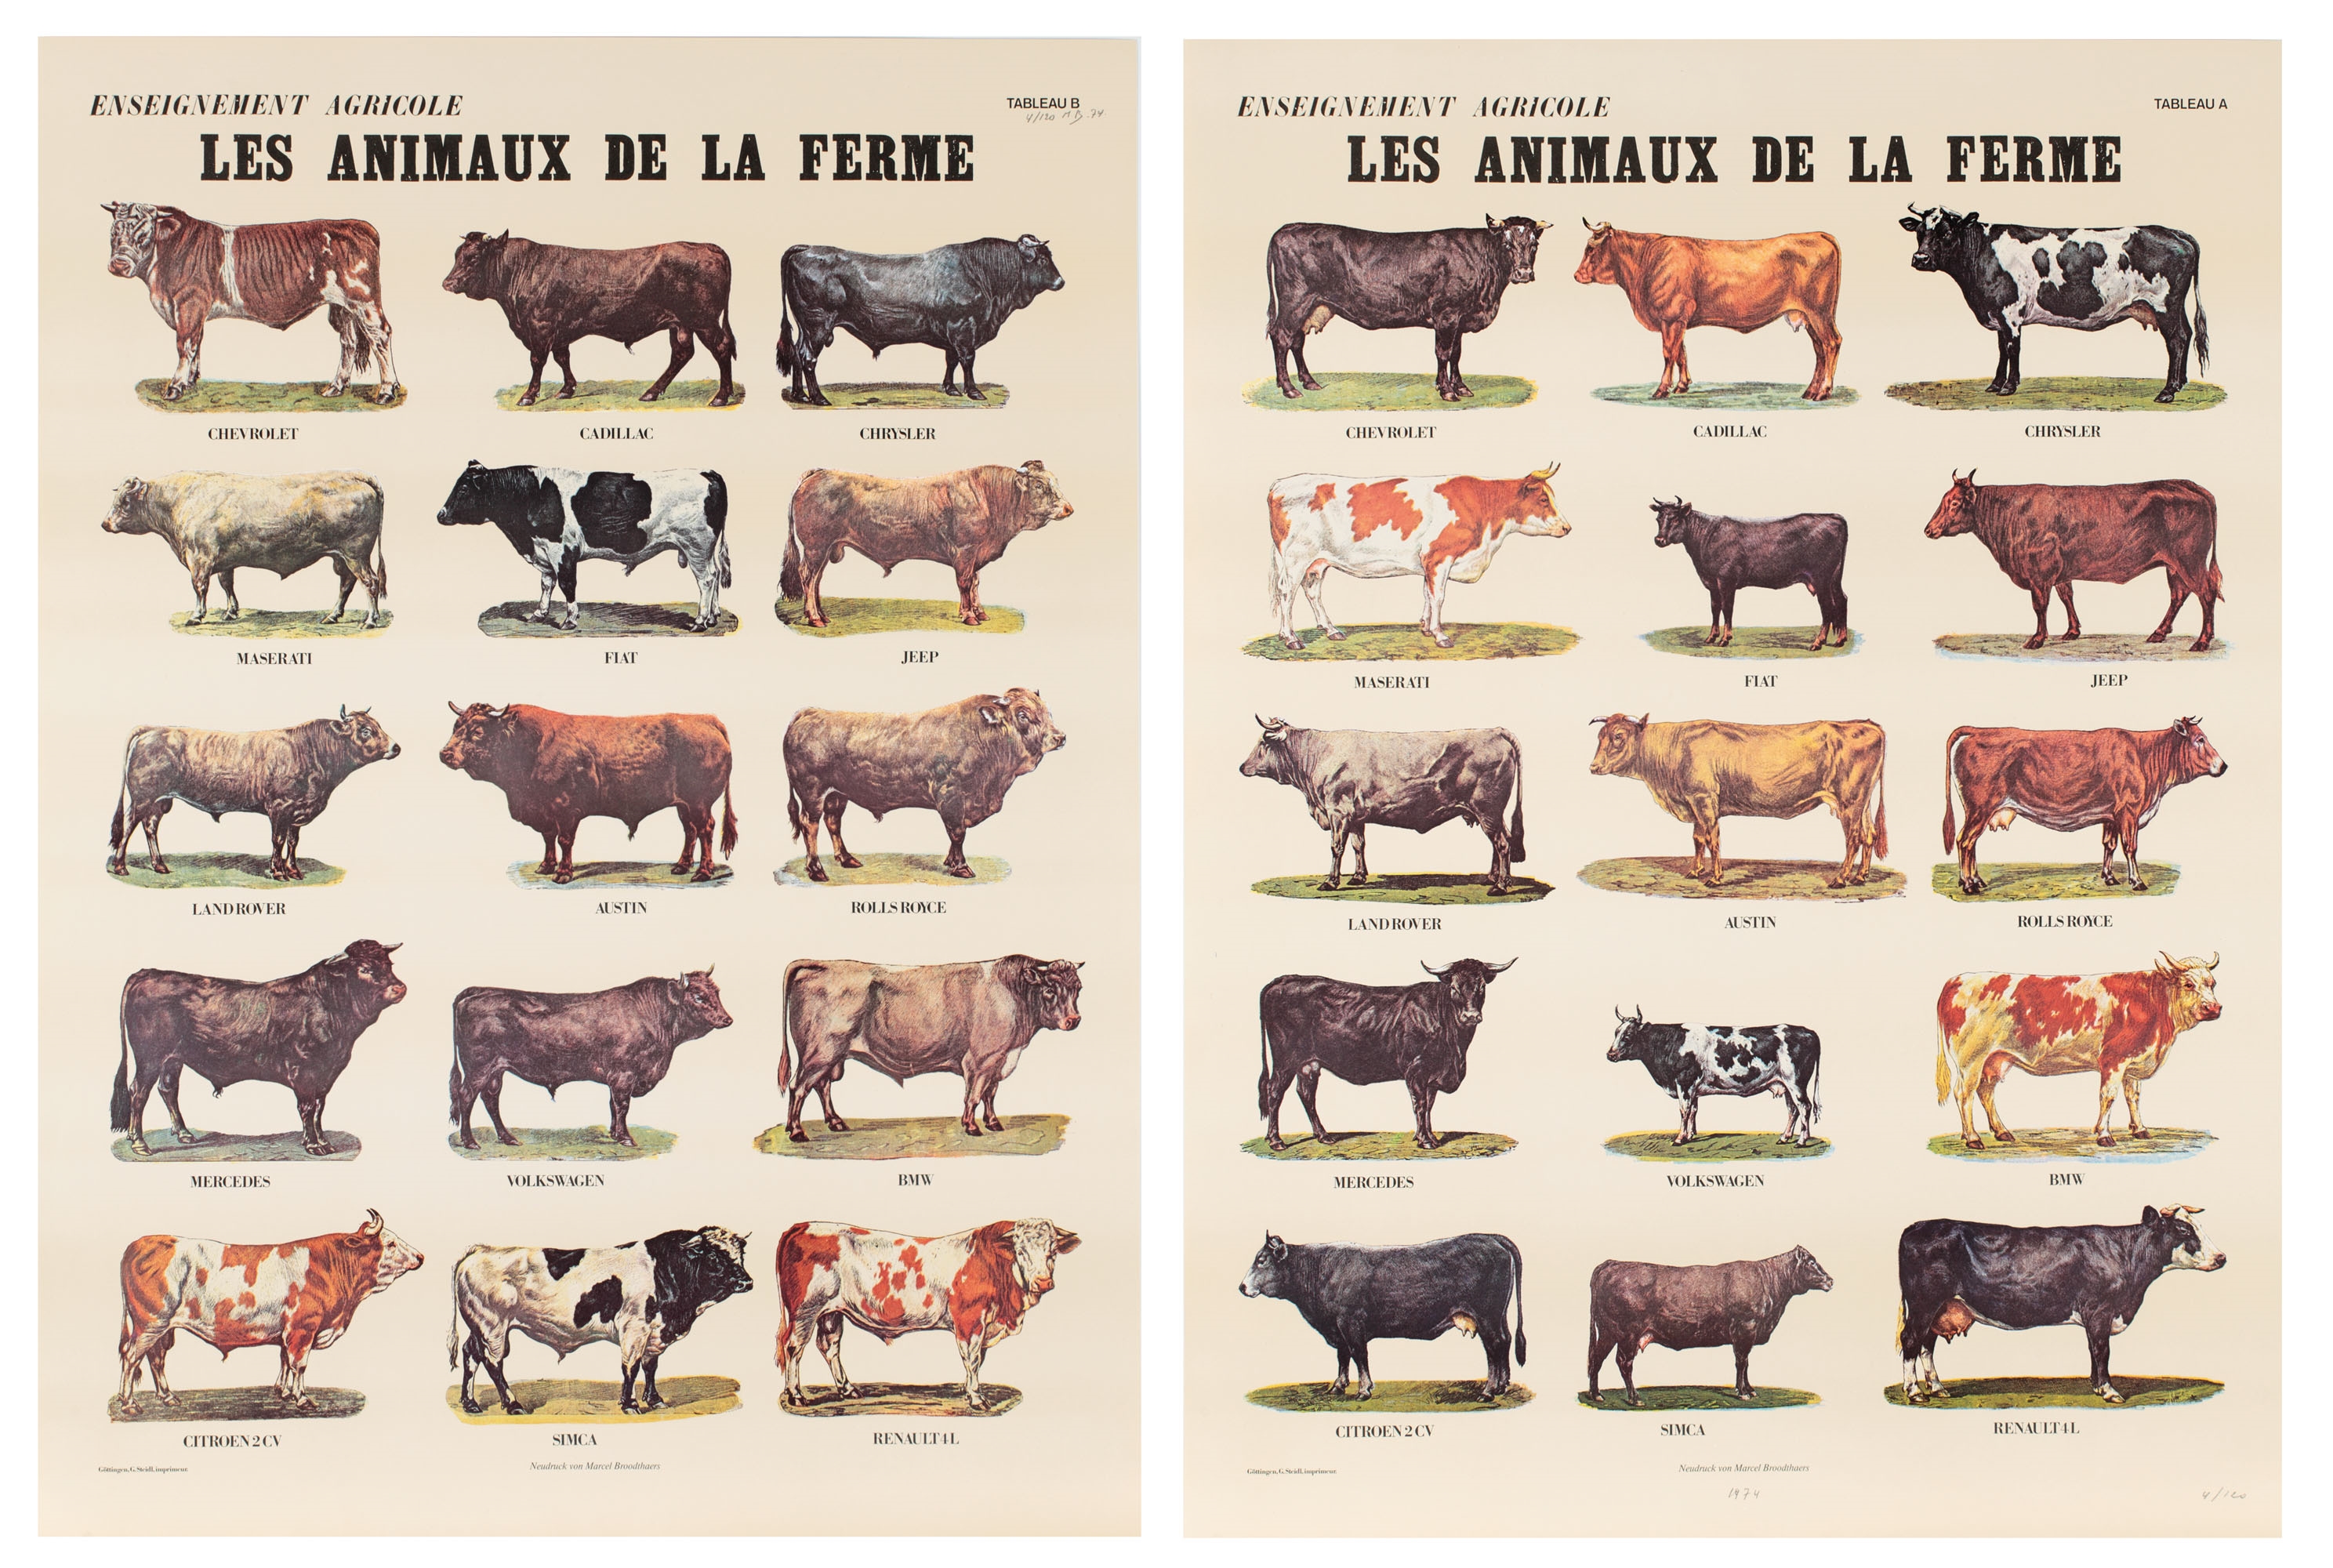 Les Animaux de la Ferme, Animals of the Farm in French